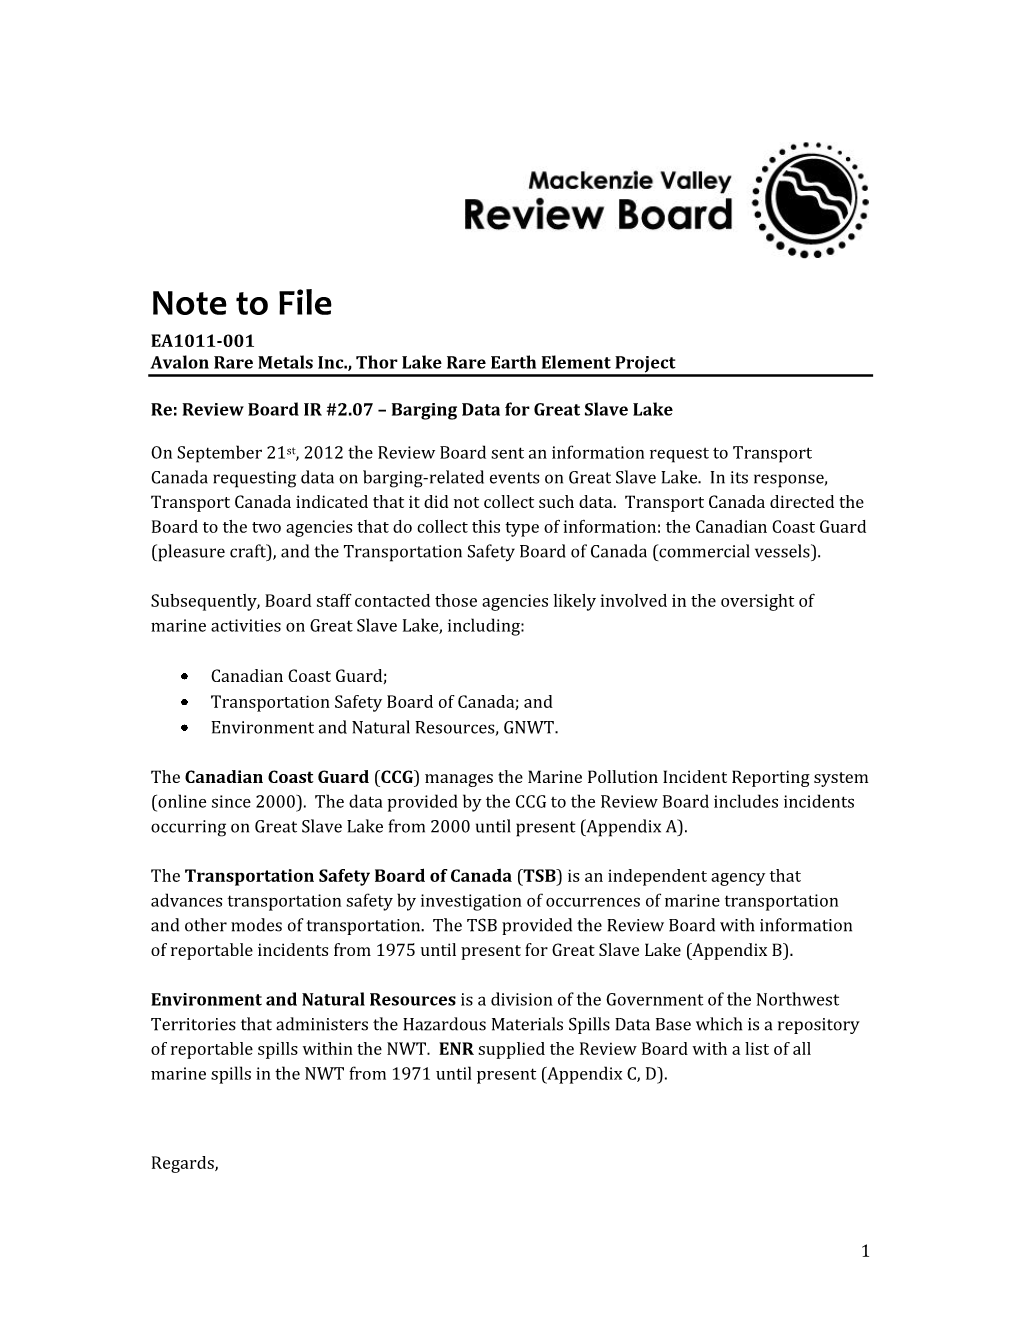 Note to File Regarding Review Board IR #2.07